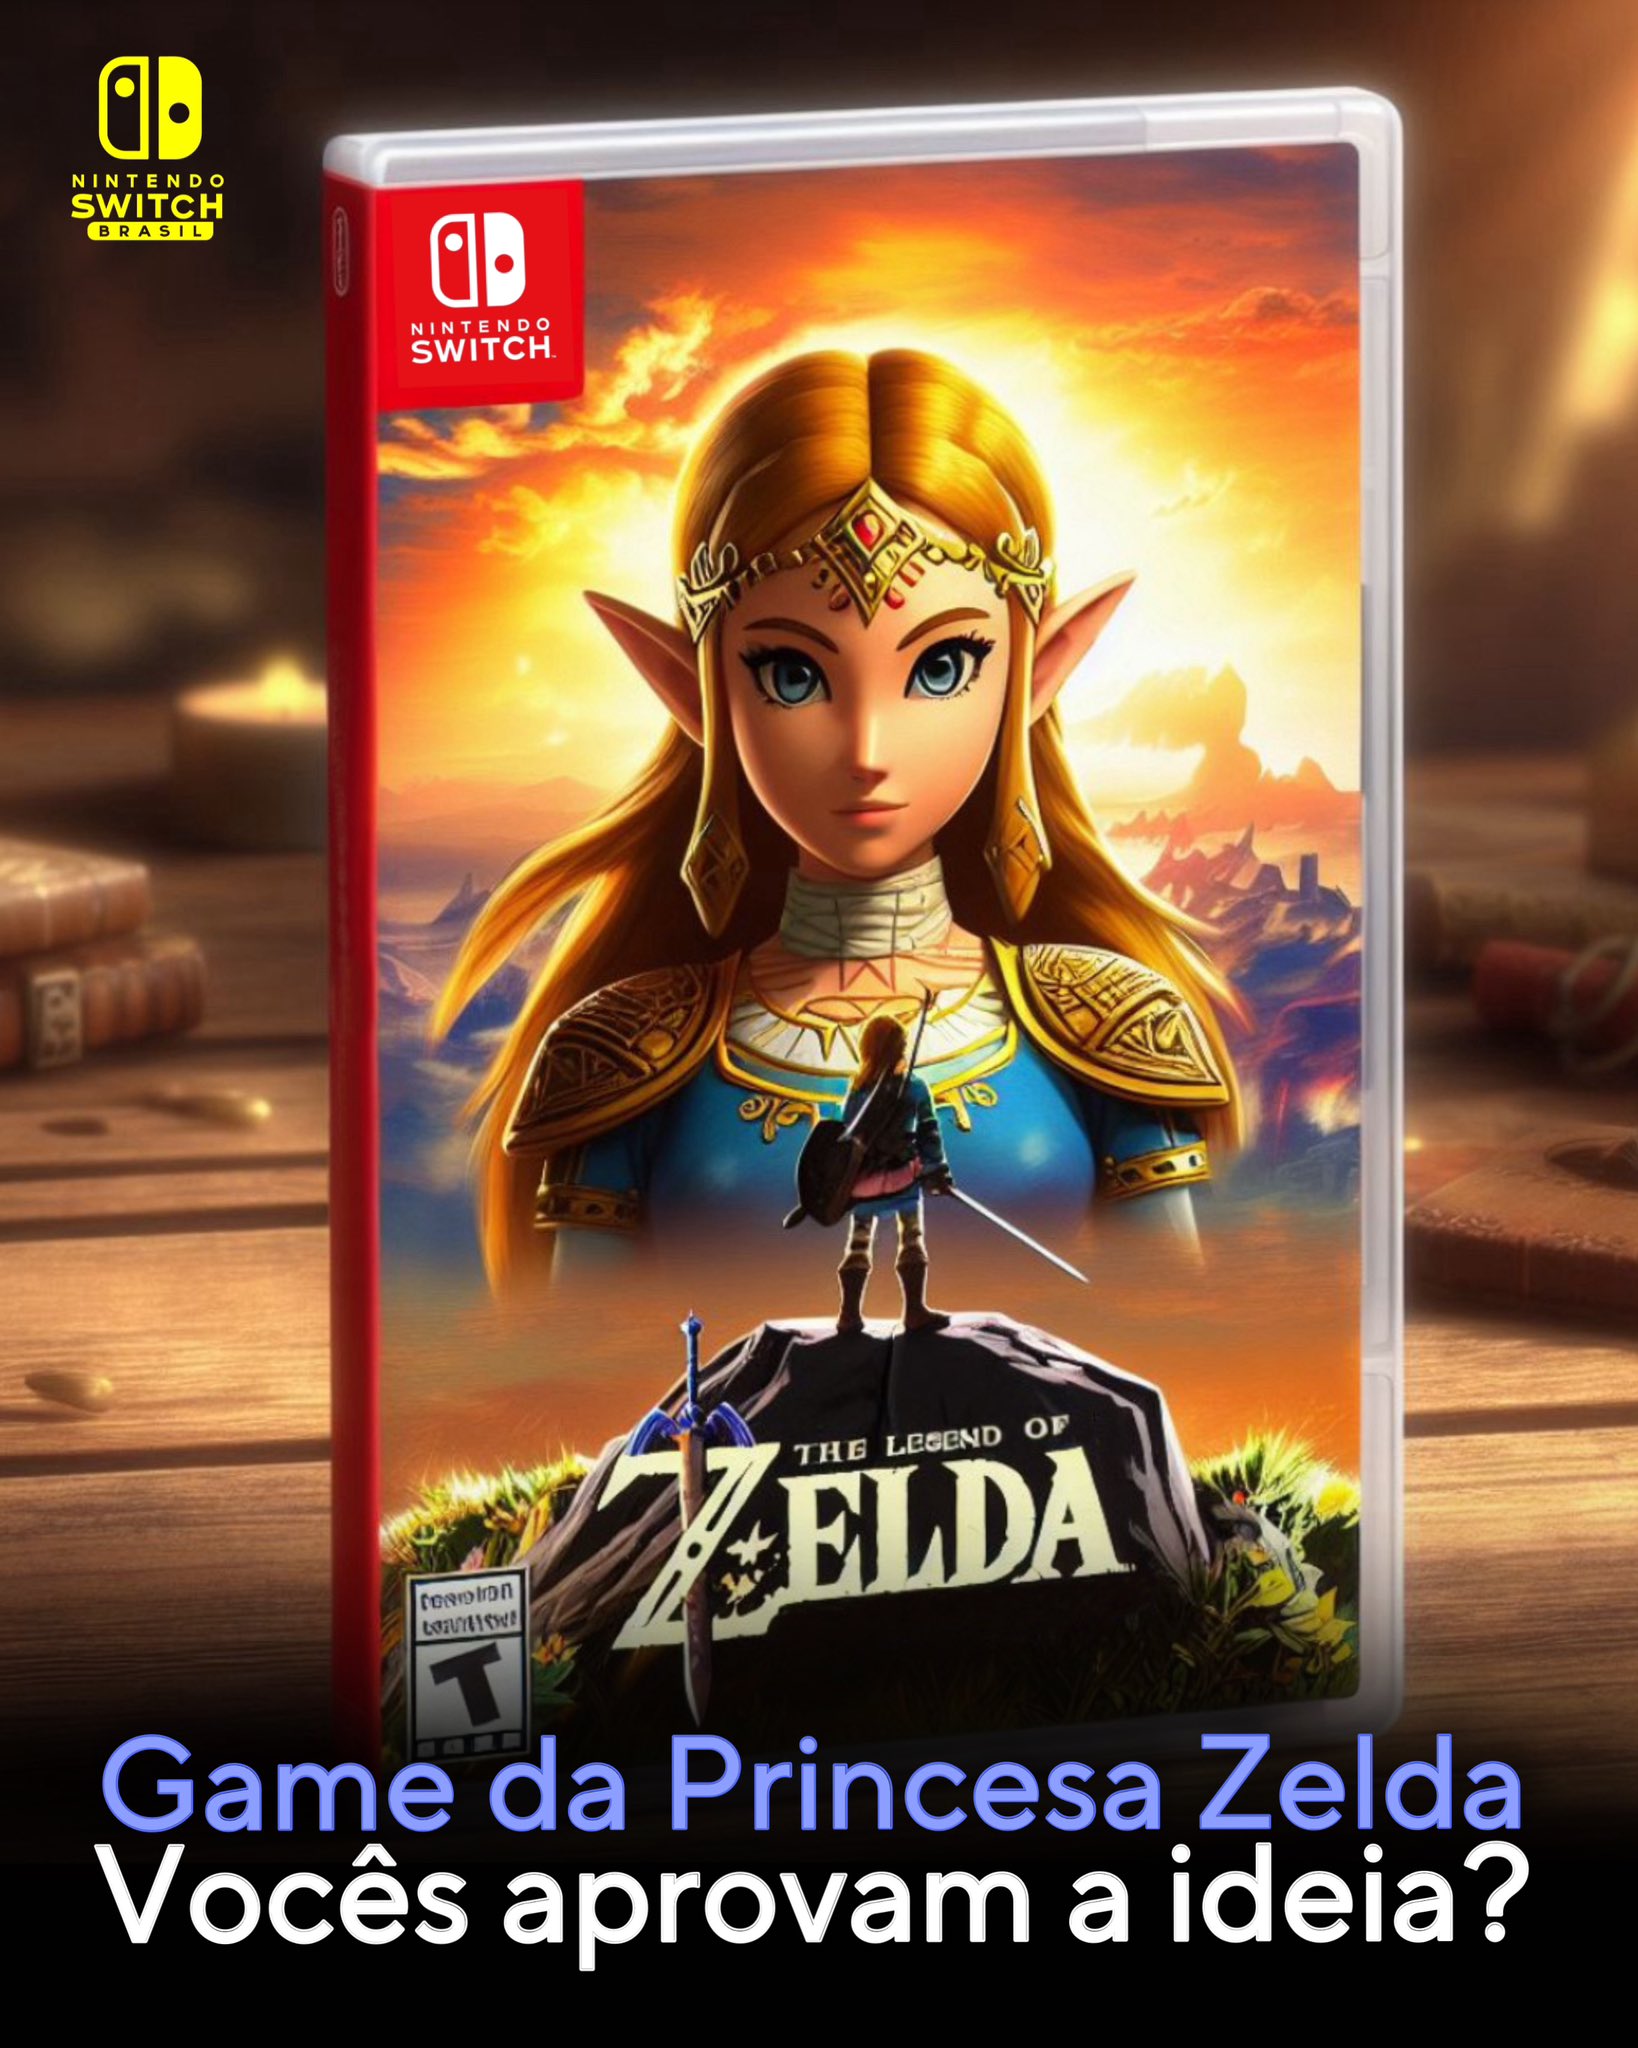 Nintendo Switch Brasil (@nintendosbrasil) / X